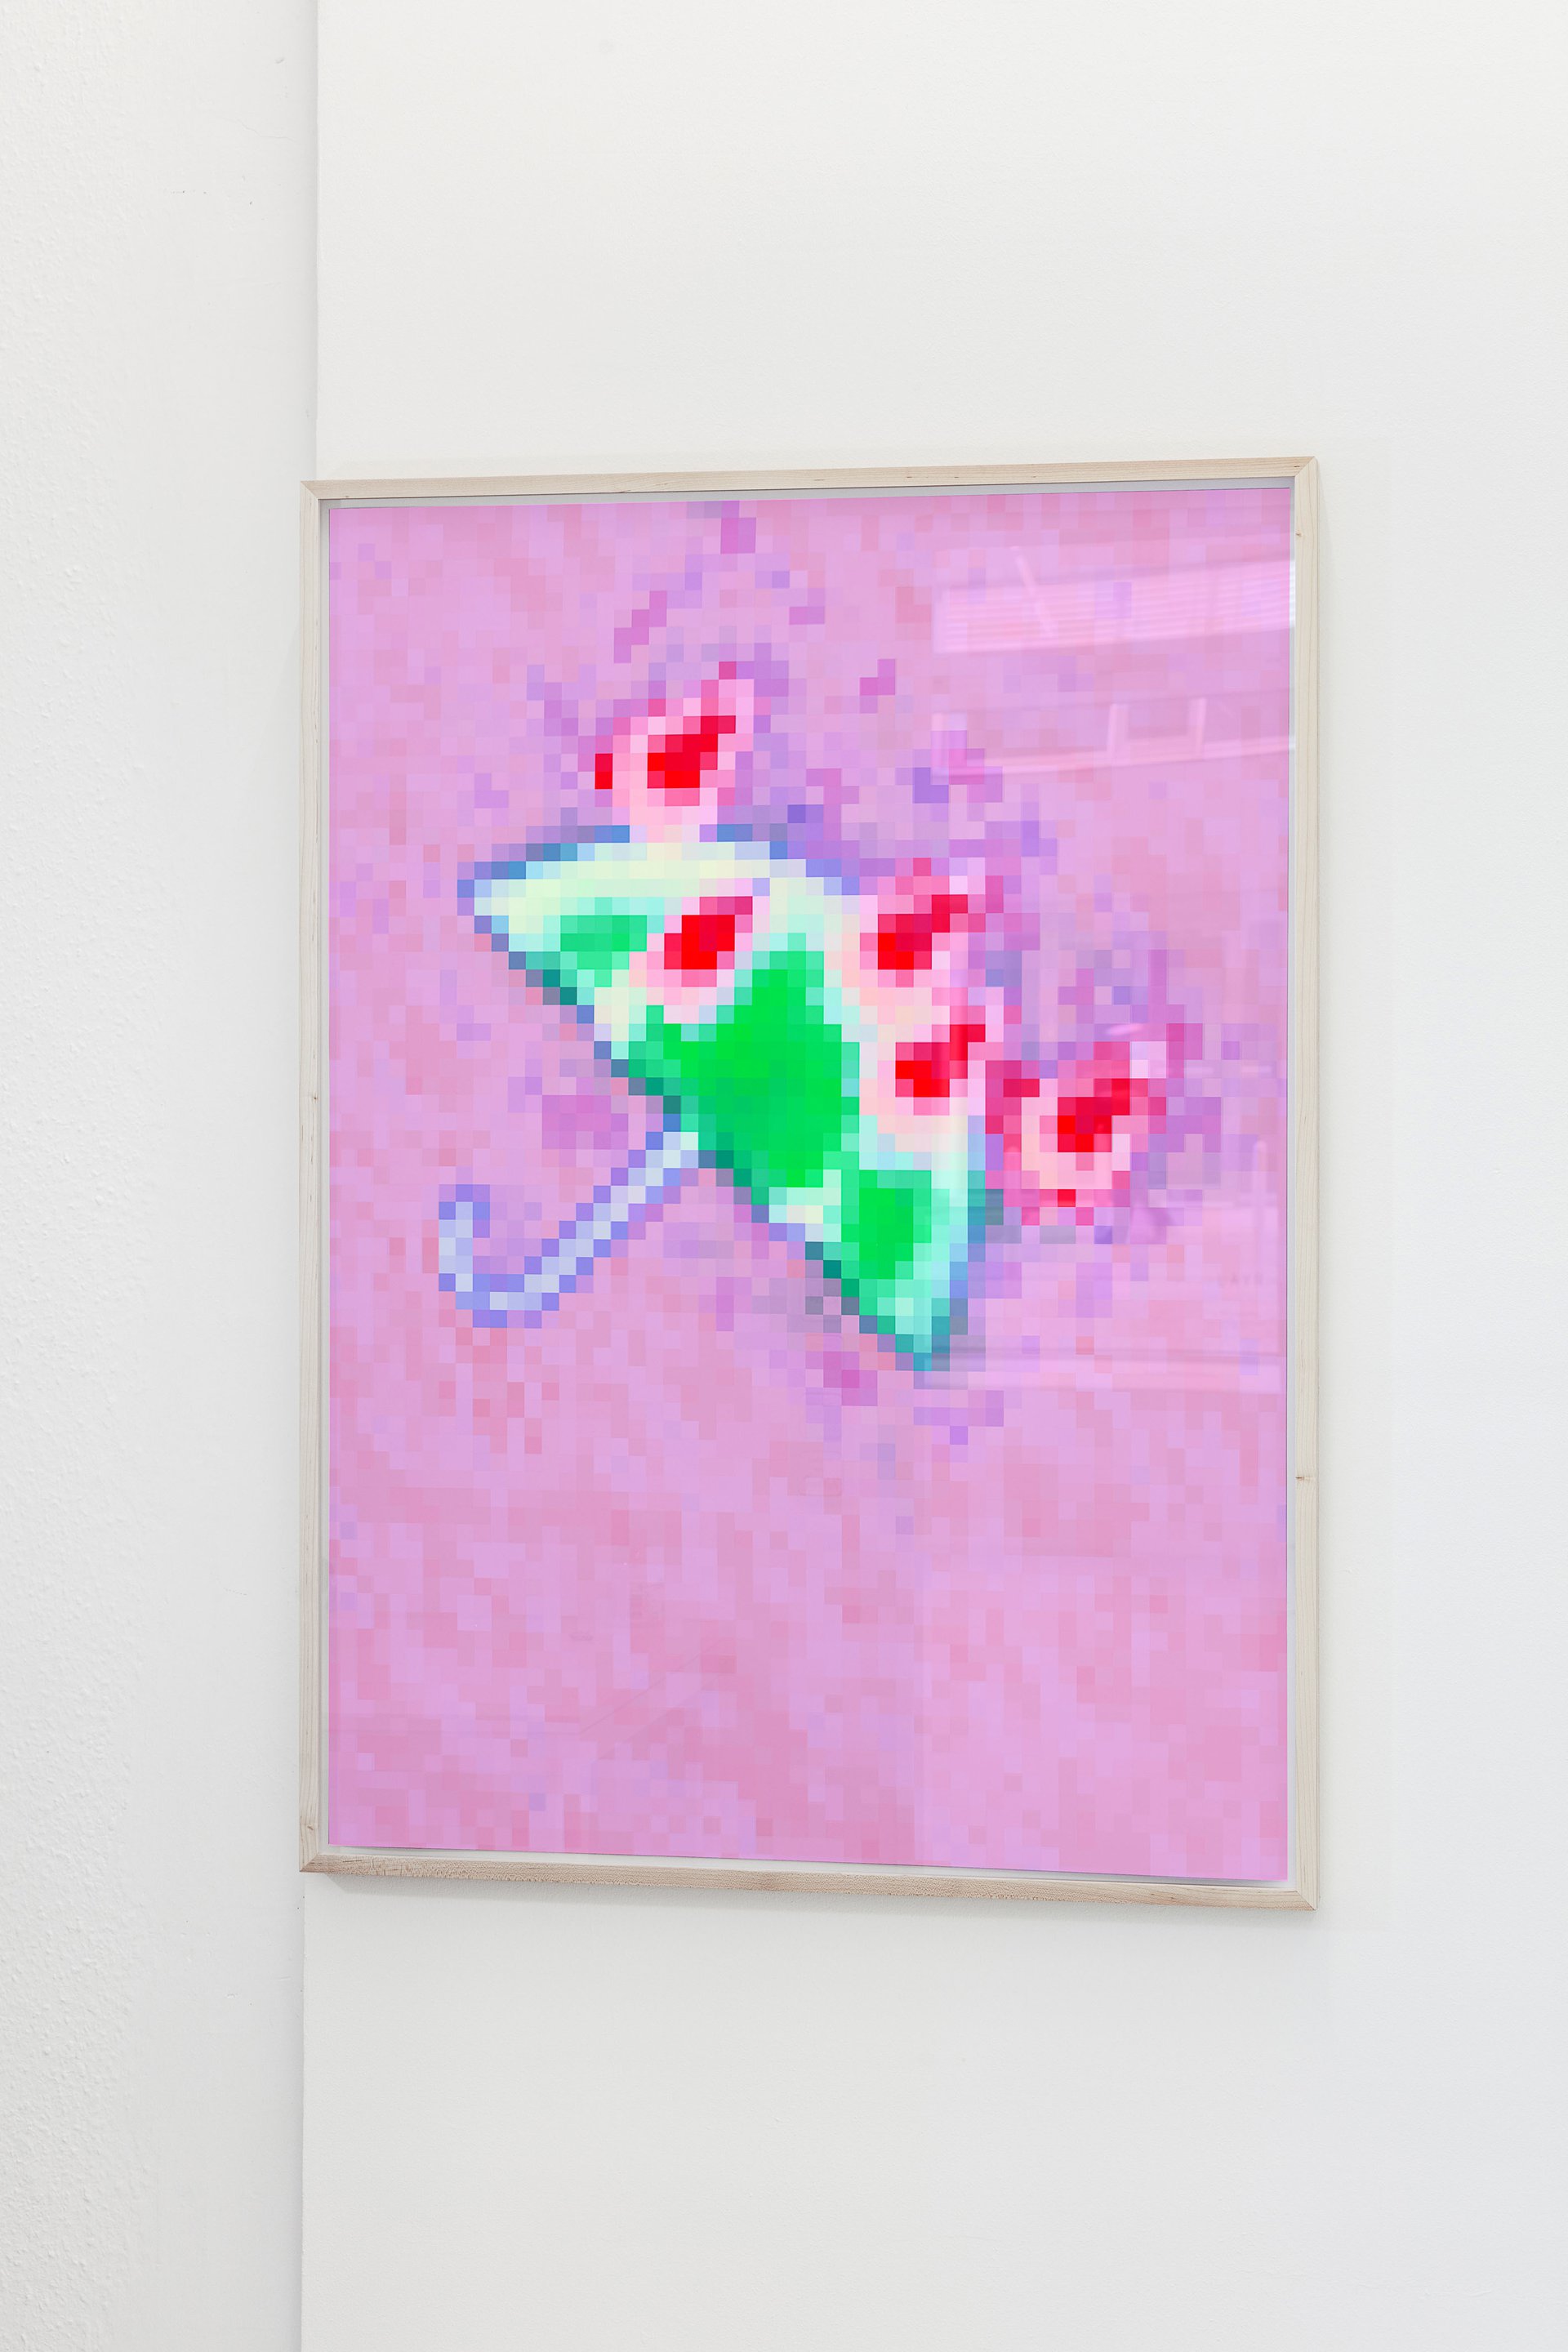 Lisa HolzerRain / Umbrella (pink/green), 2021 Pigment print on cotton paper, black marker on wood110.3 x 80.1 cm